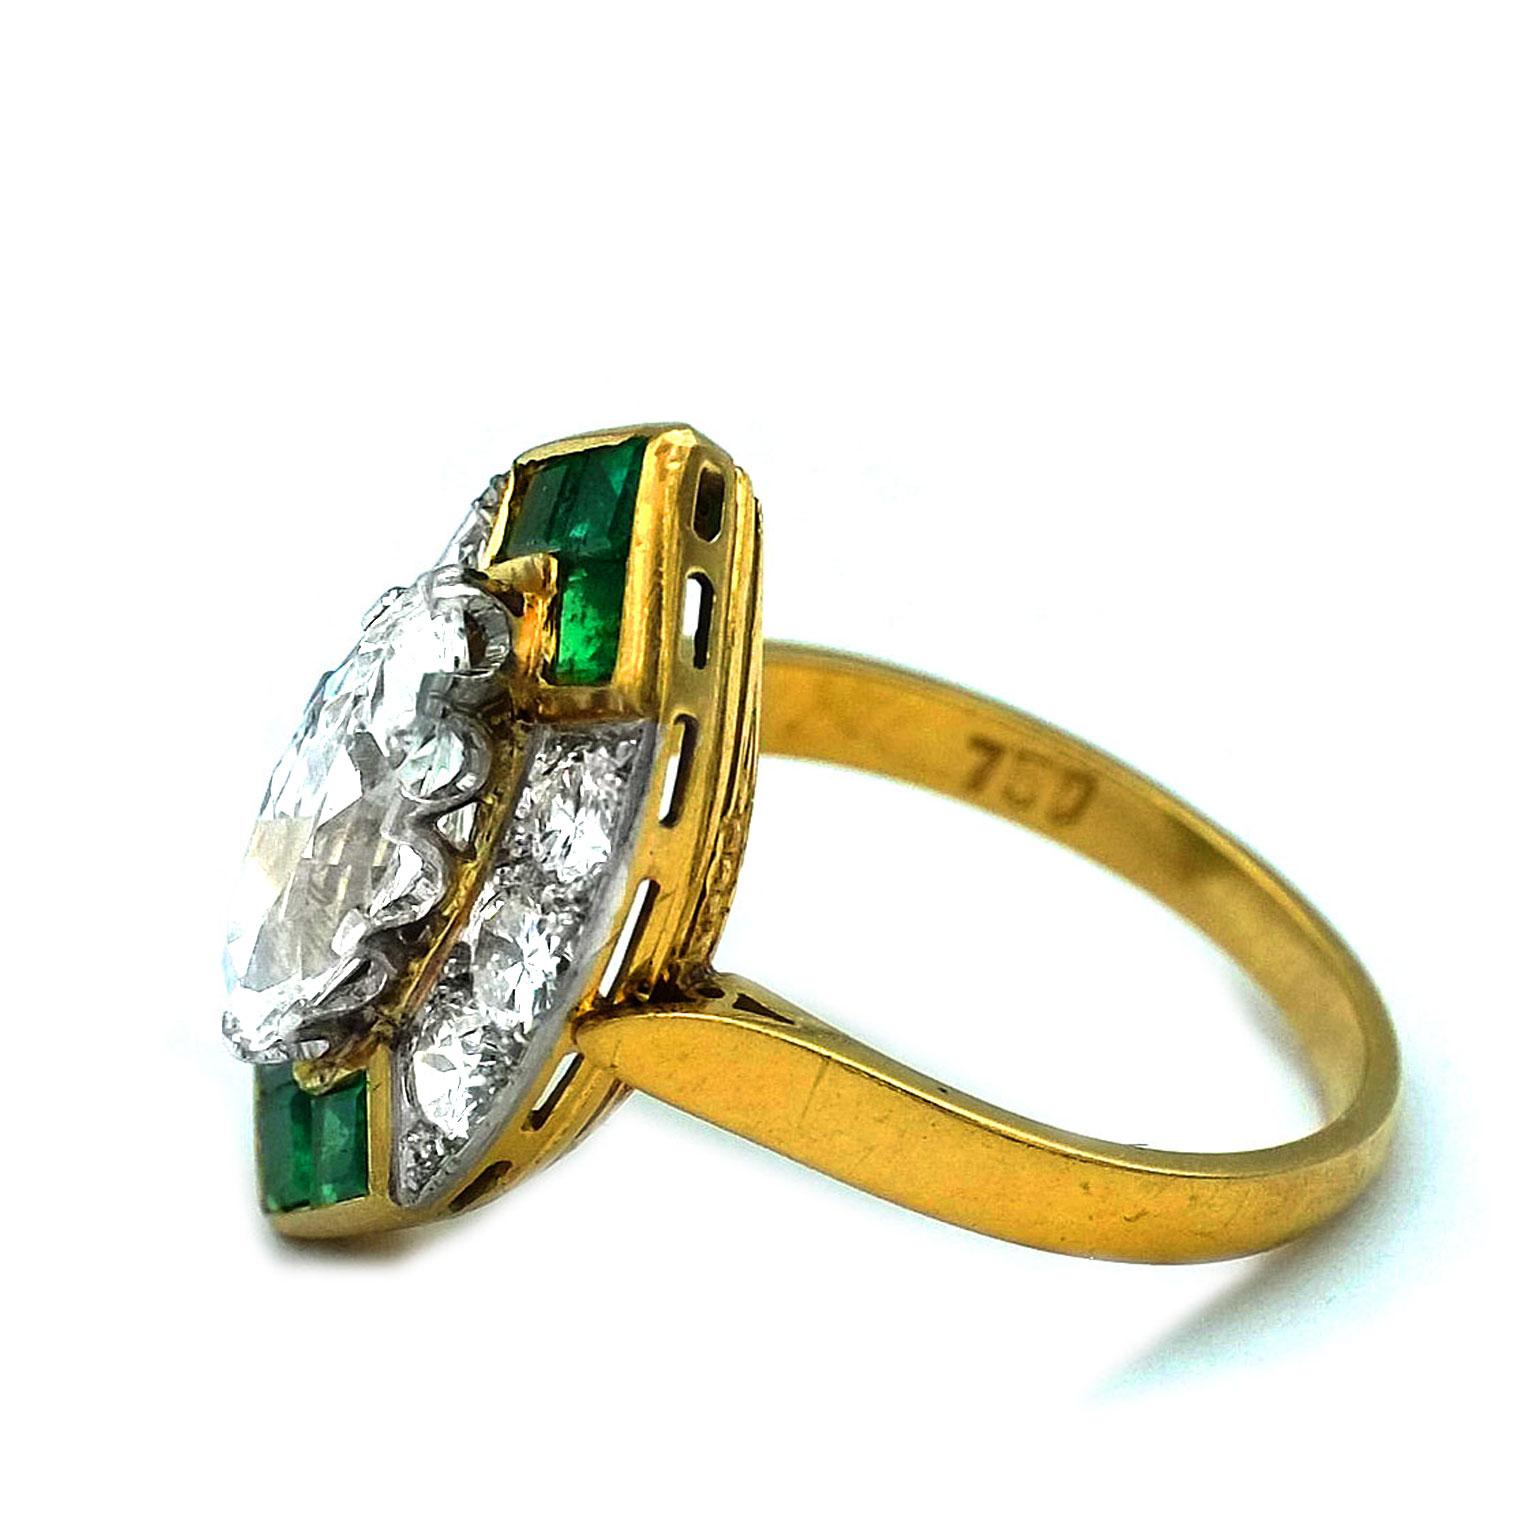 Women's Art Deco 1.4 Carat Marquise Cut Diamond and Emerald 18k Gold Ring, circa 1930